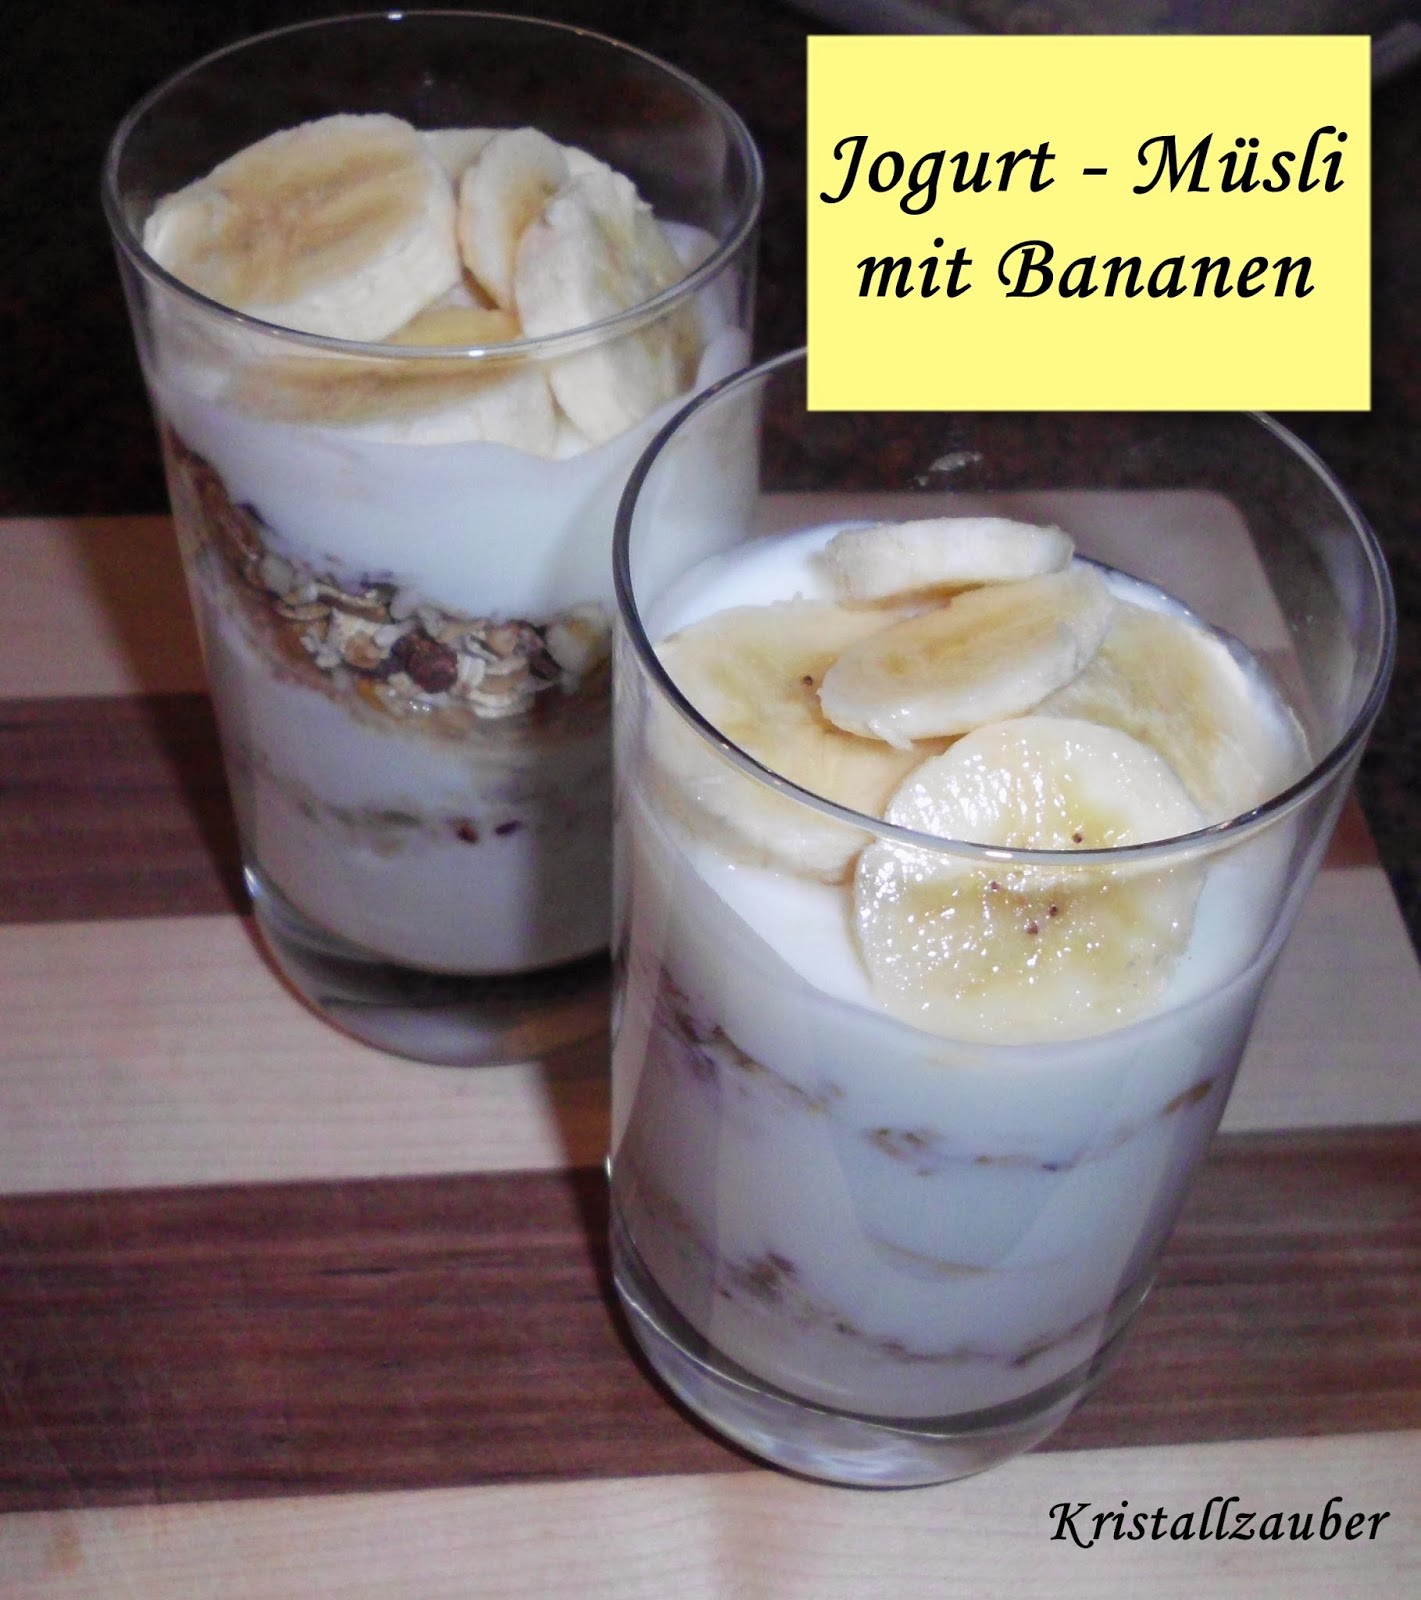 Kristallzauber: {Rezept} Jogurt - Müsli mit Bananen